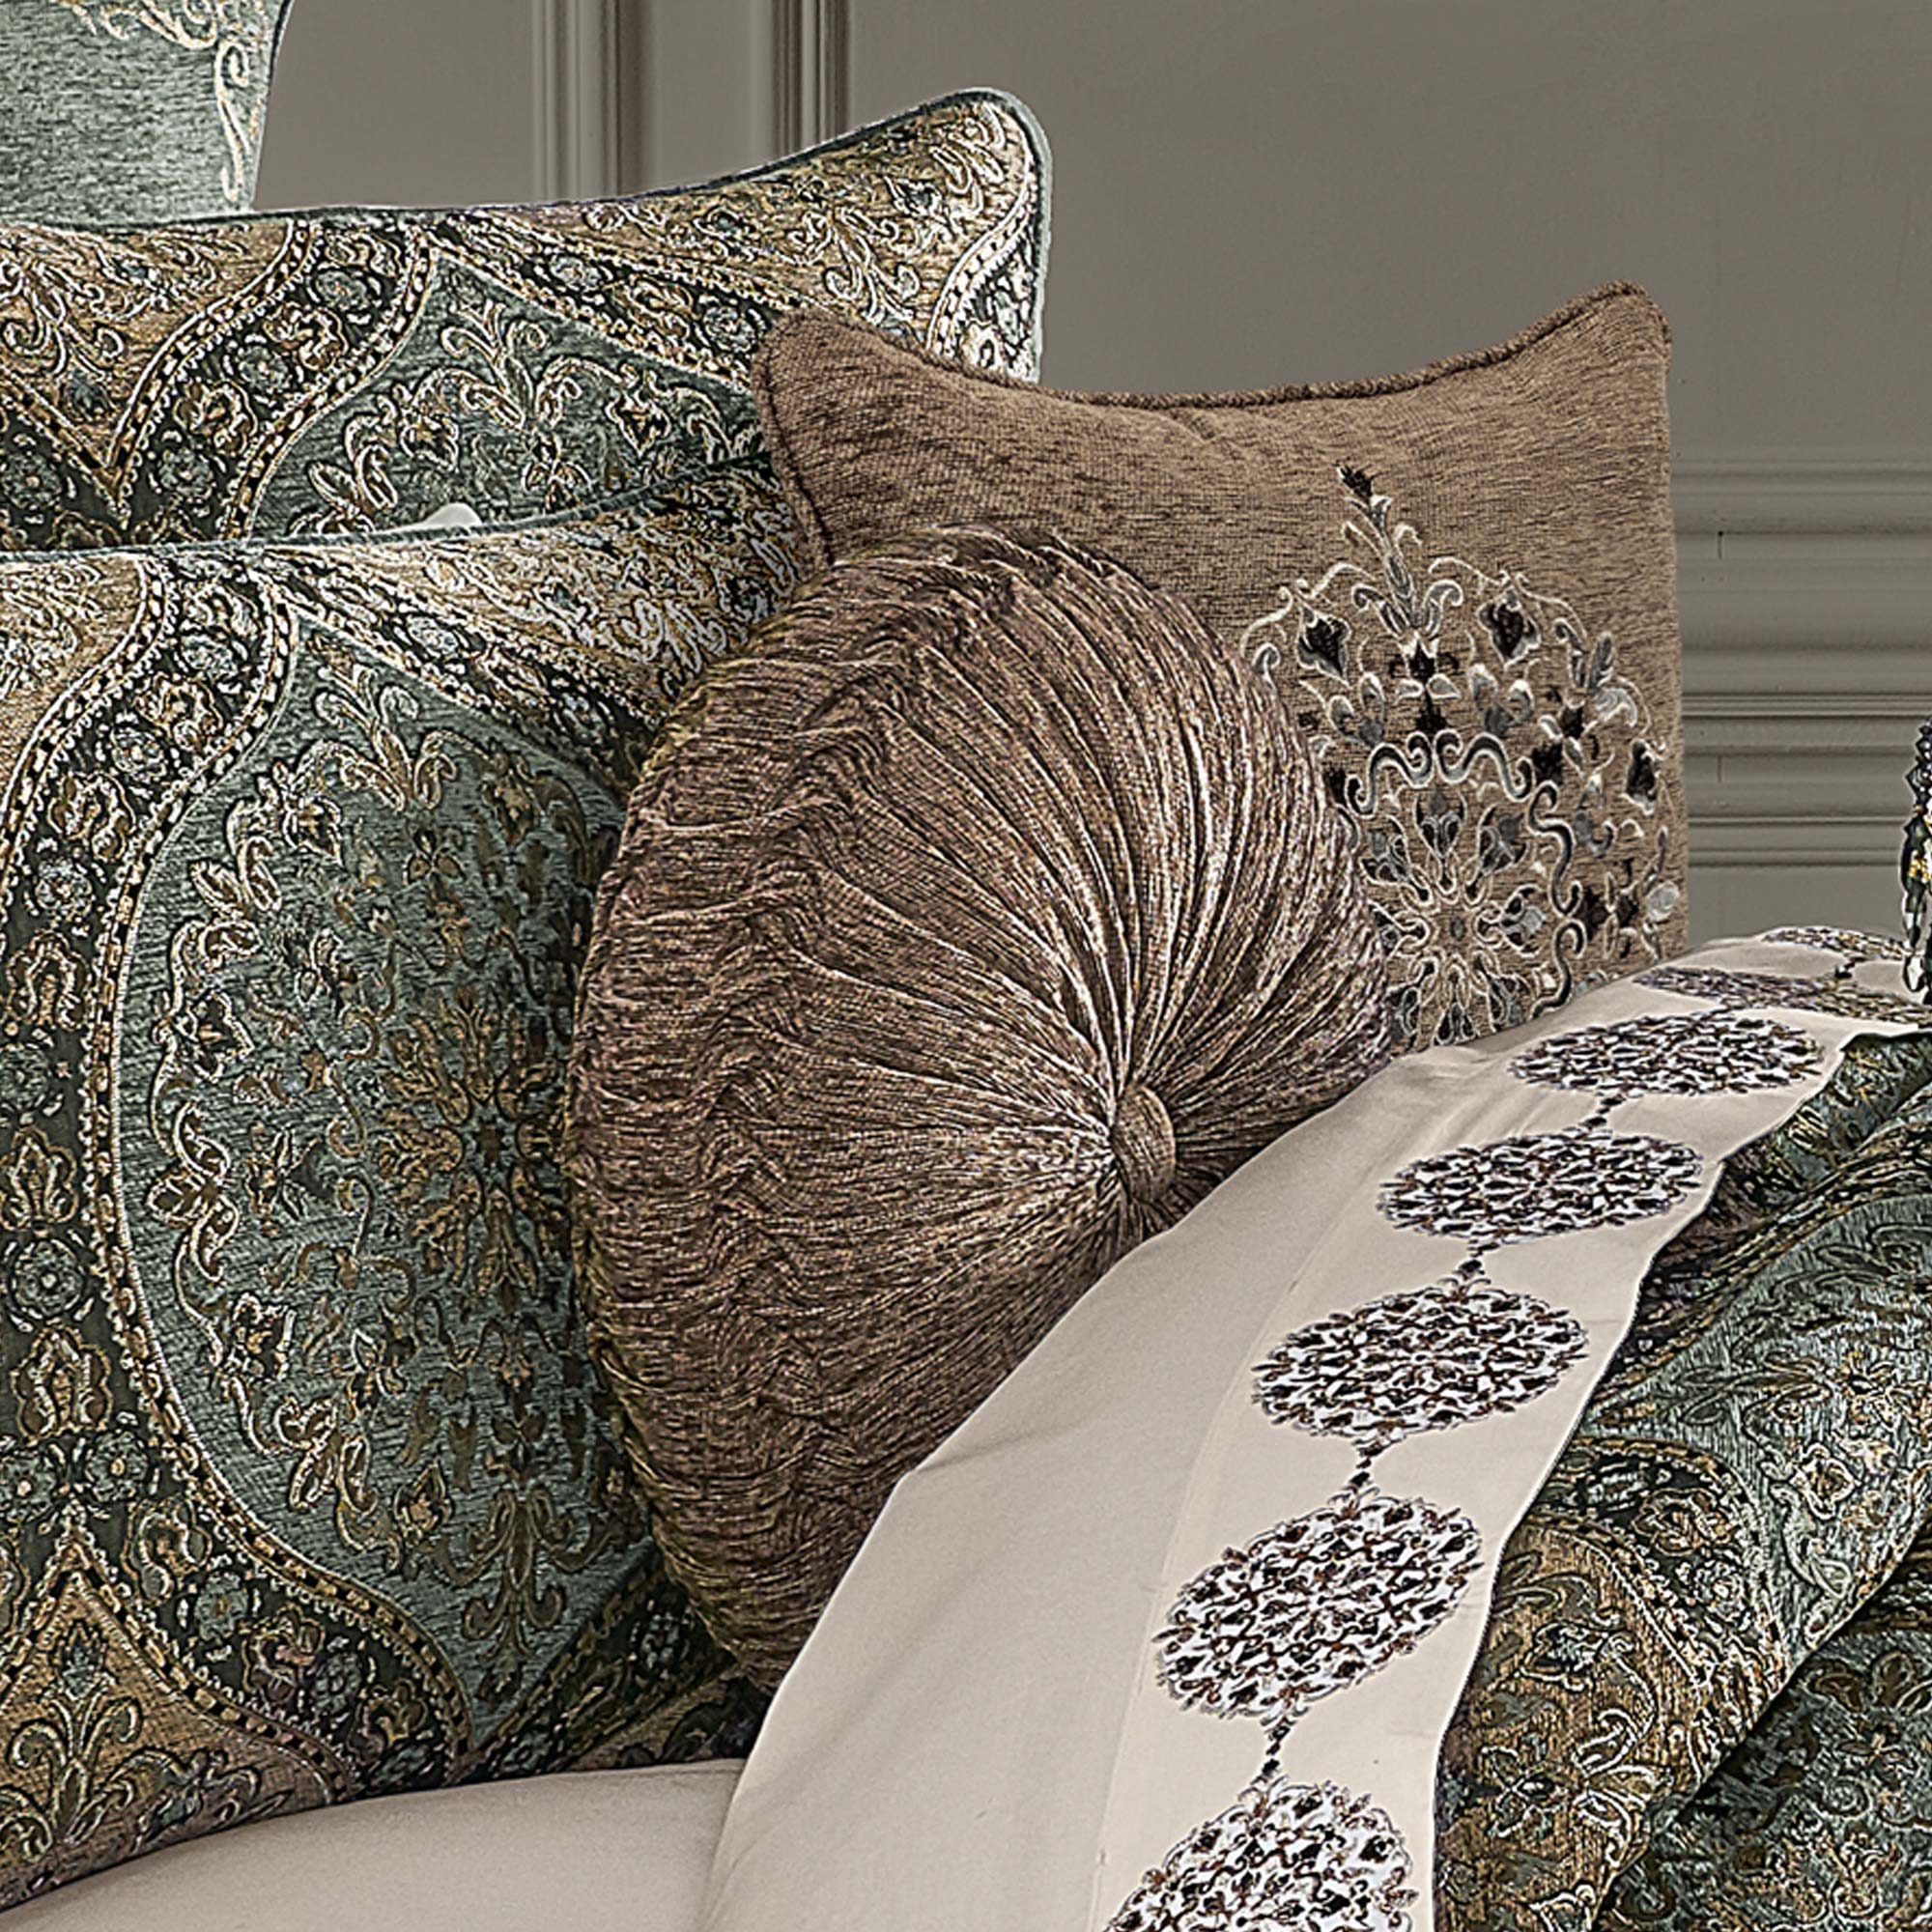 Dorset Tufted Round Decorative Throw Pillow